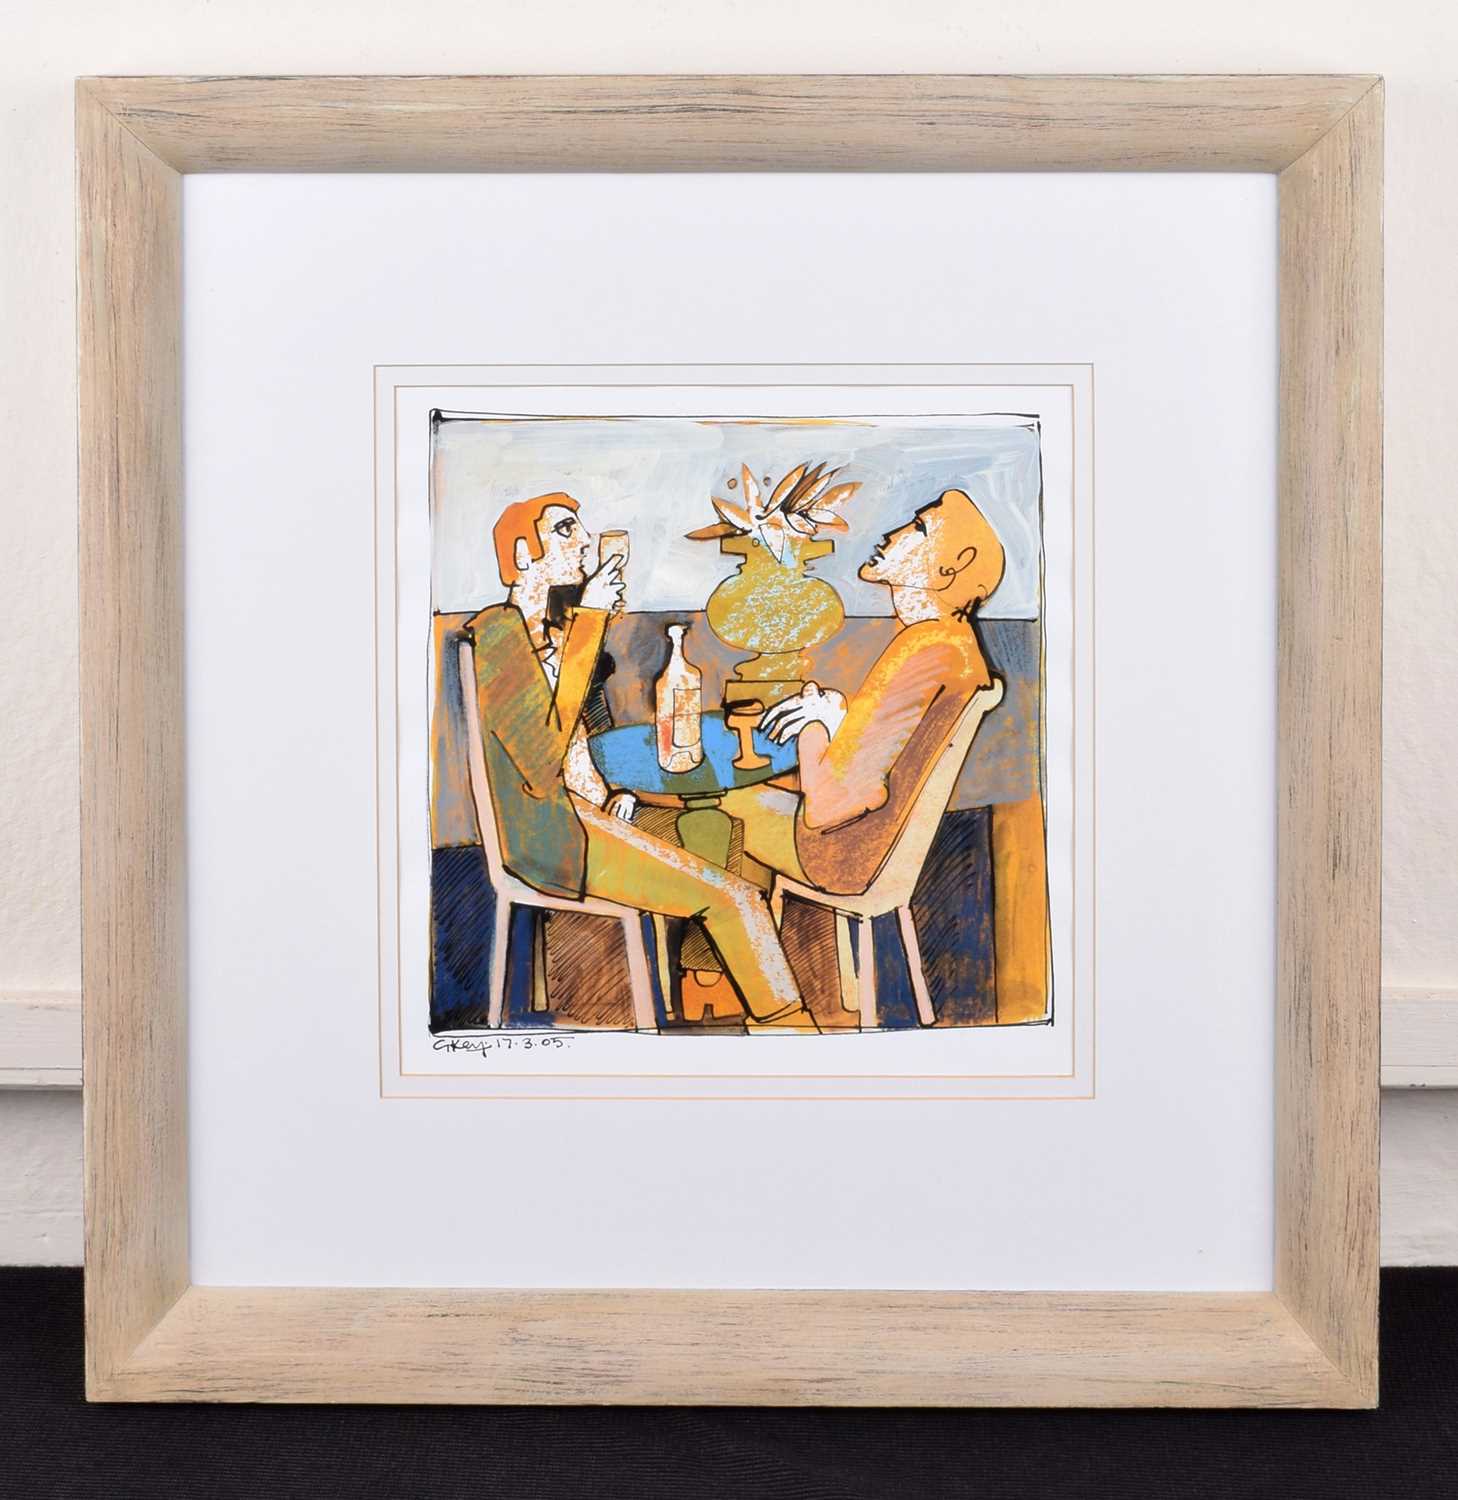 Geoffrey Key (British 1941-) "Cafe Bar Figures" - Image 2 of 2